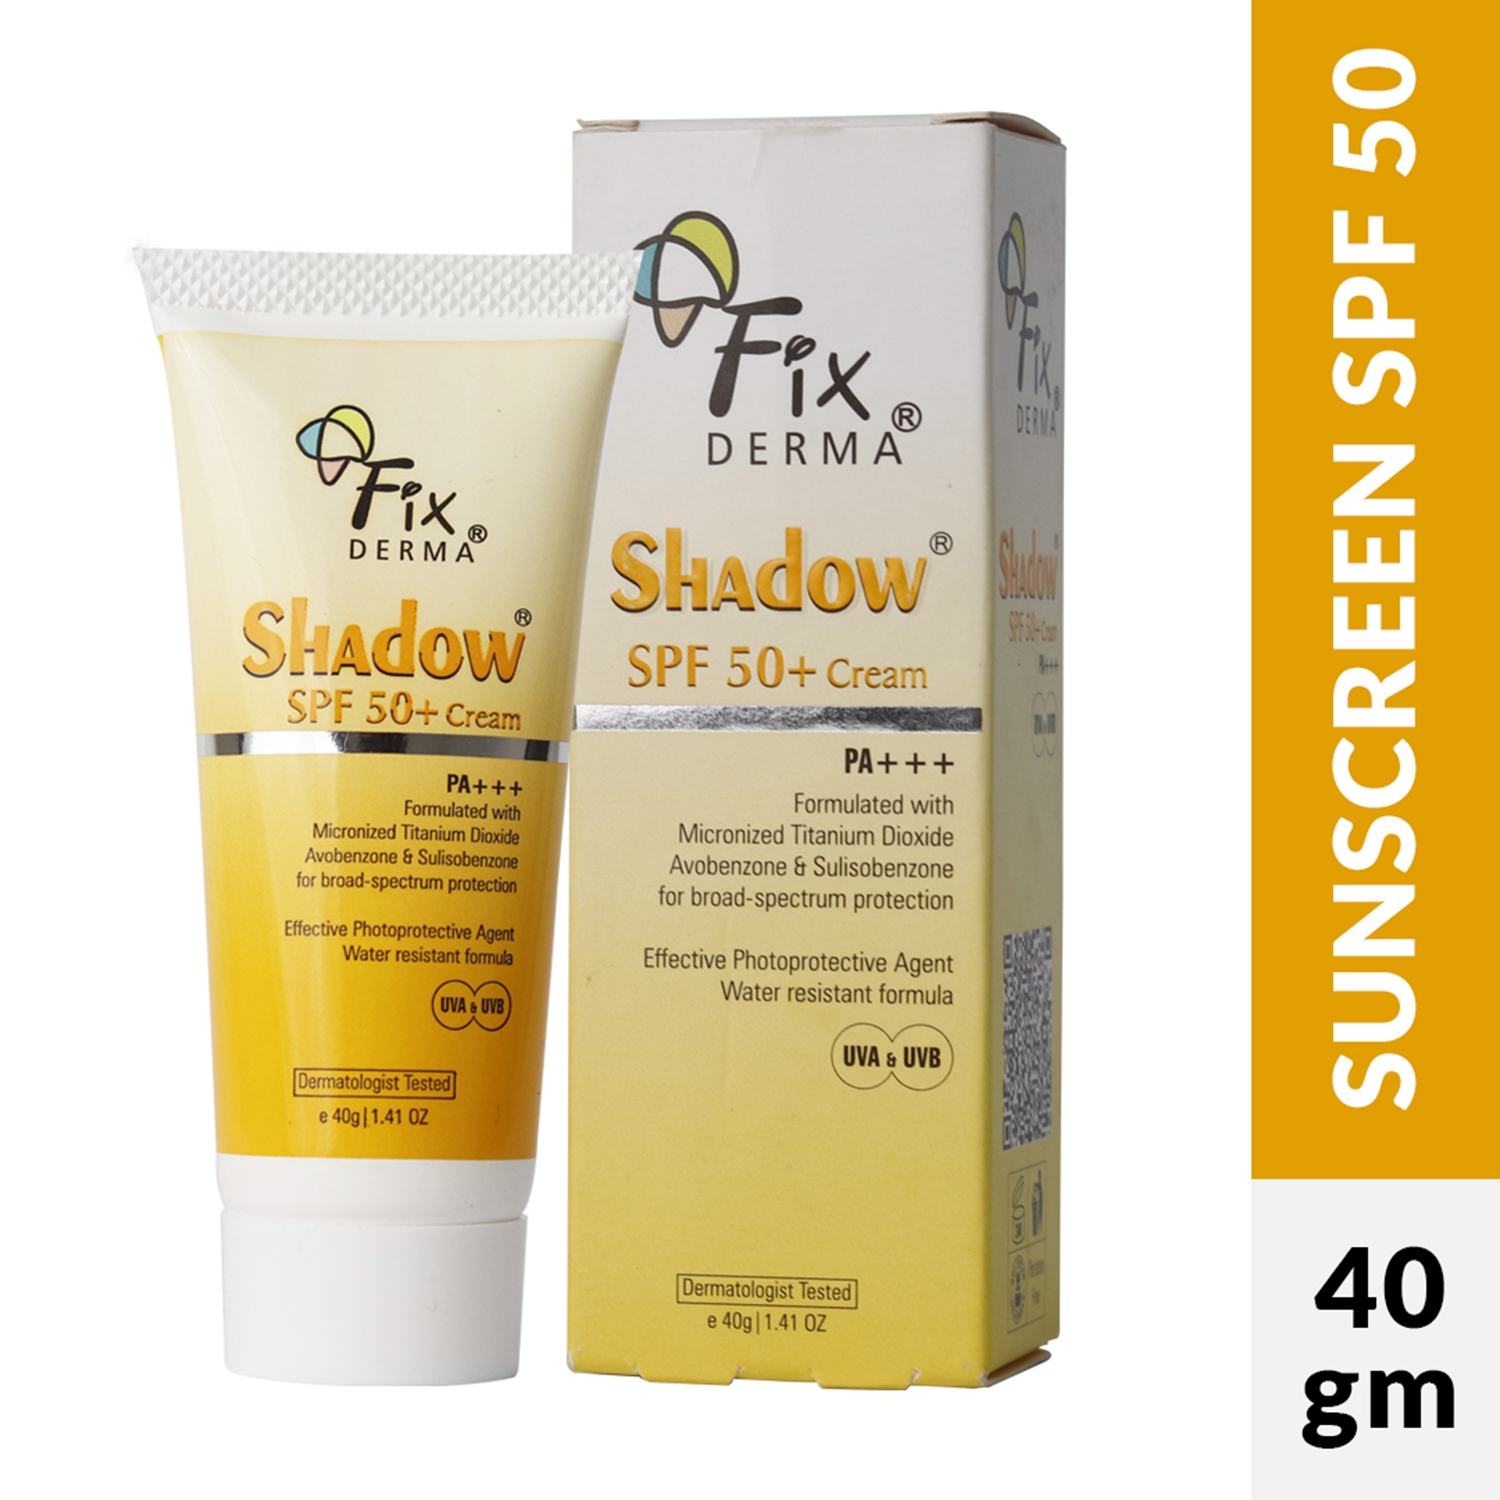 Fixderma | Fixderma Shadow SPF 50+ Cream - (40g)